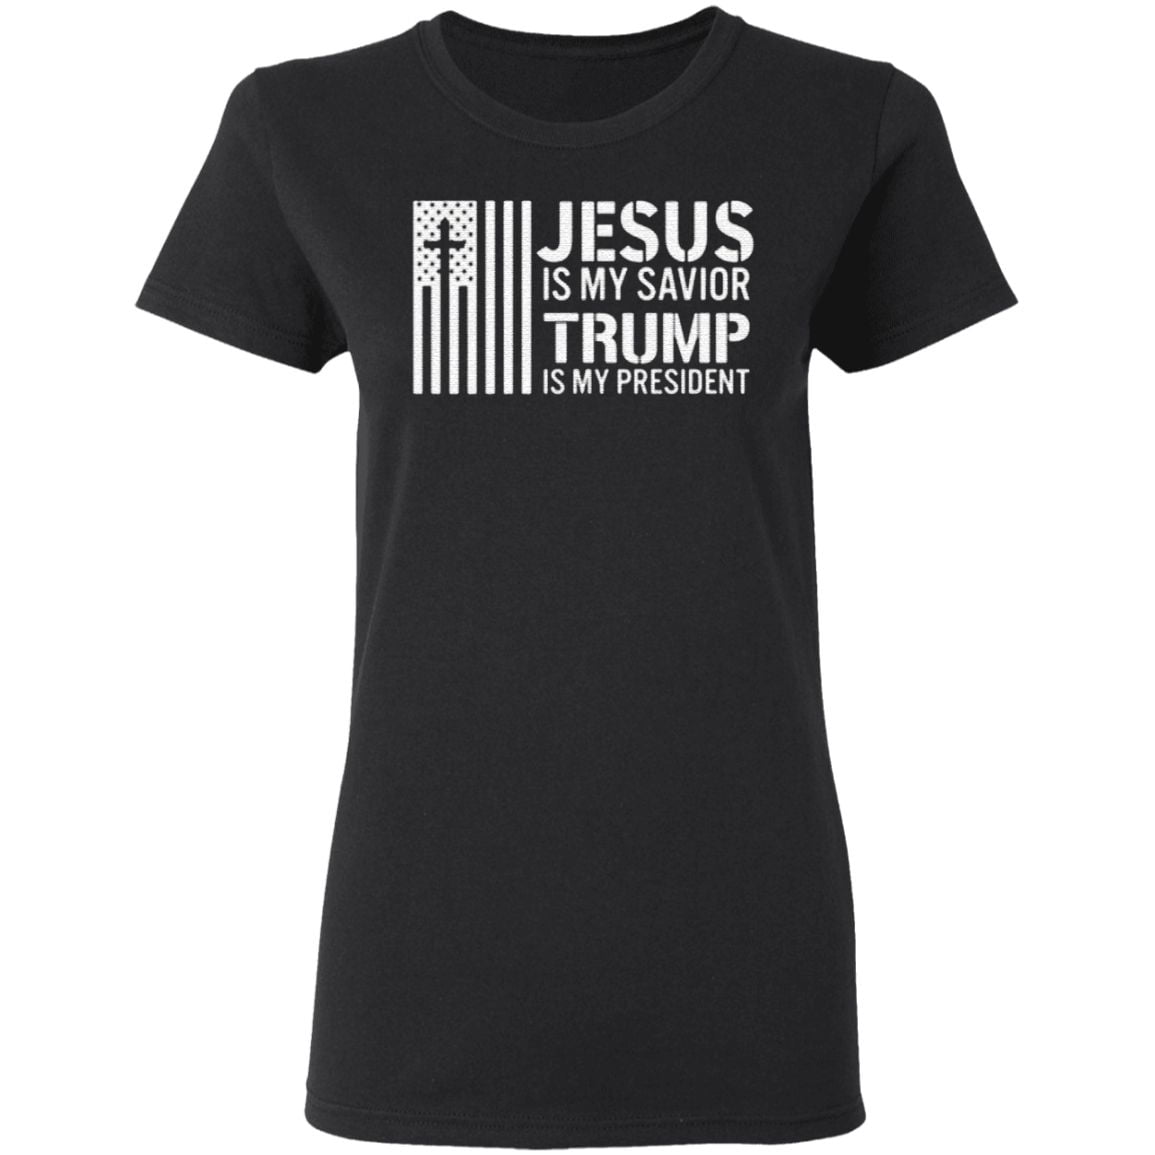 jesus is my savior trump is my president t shirt